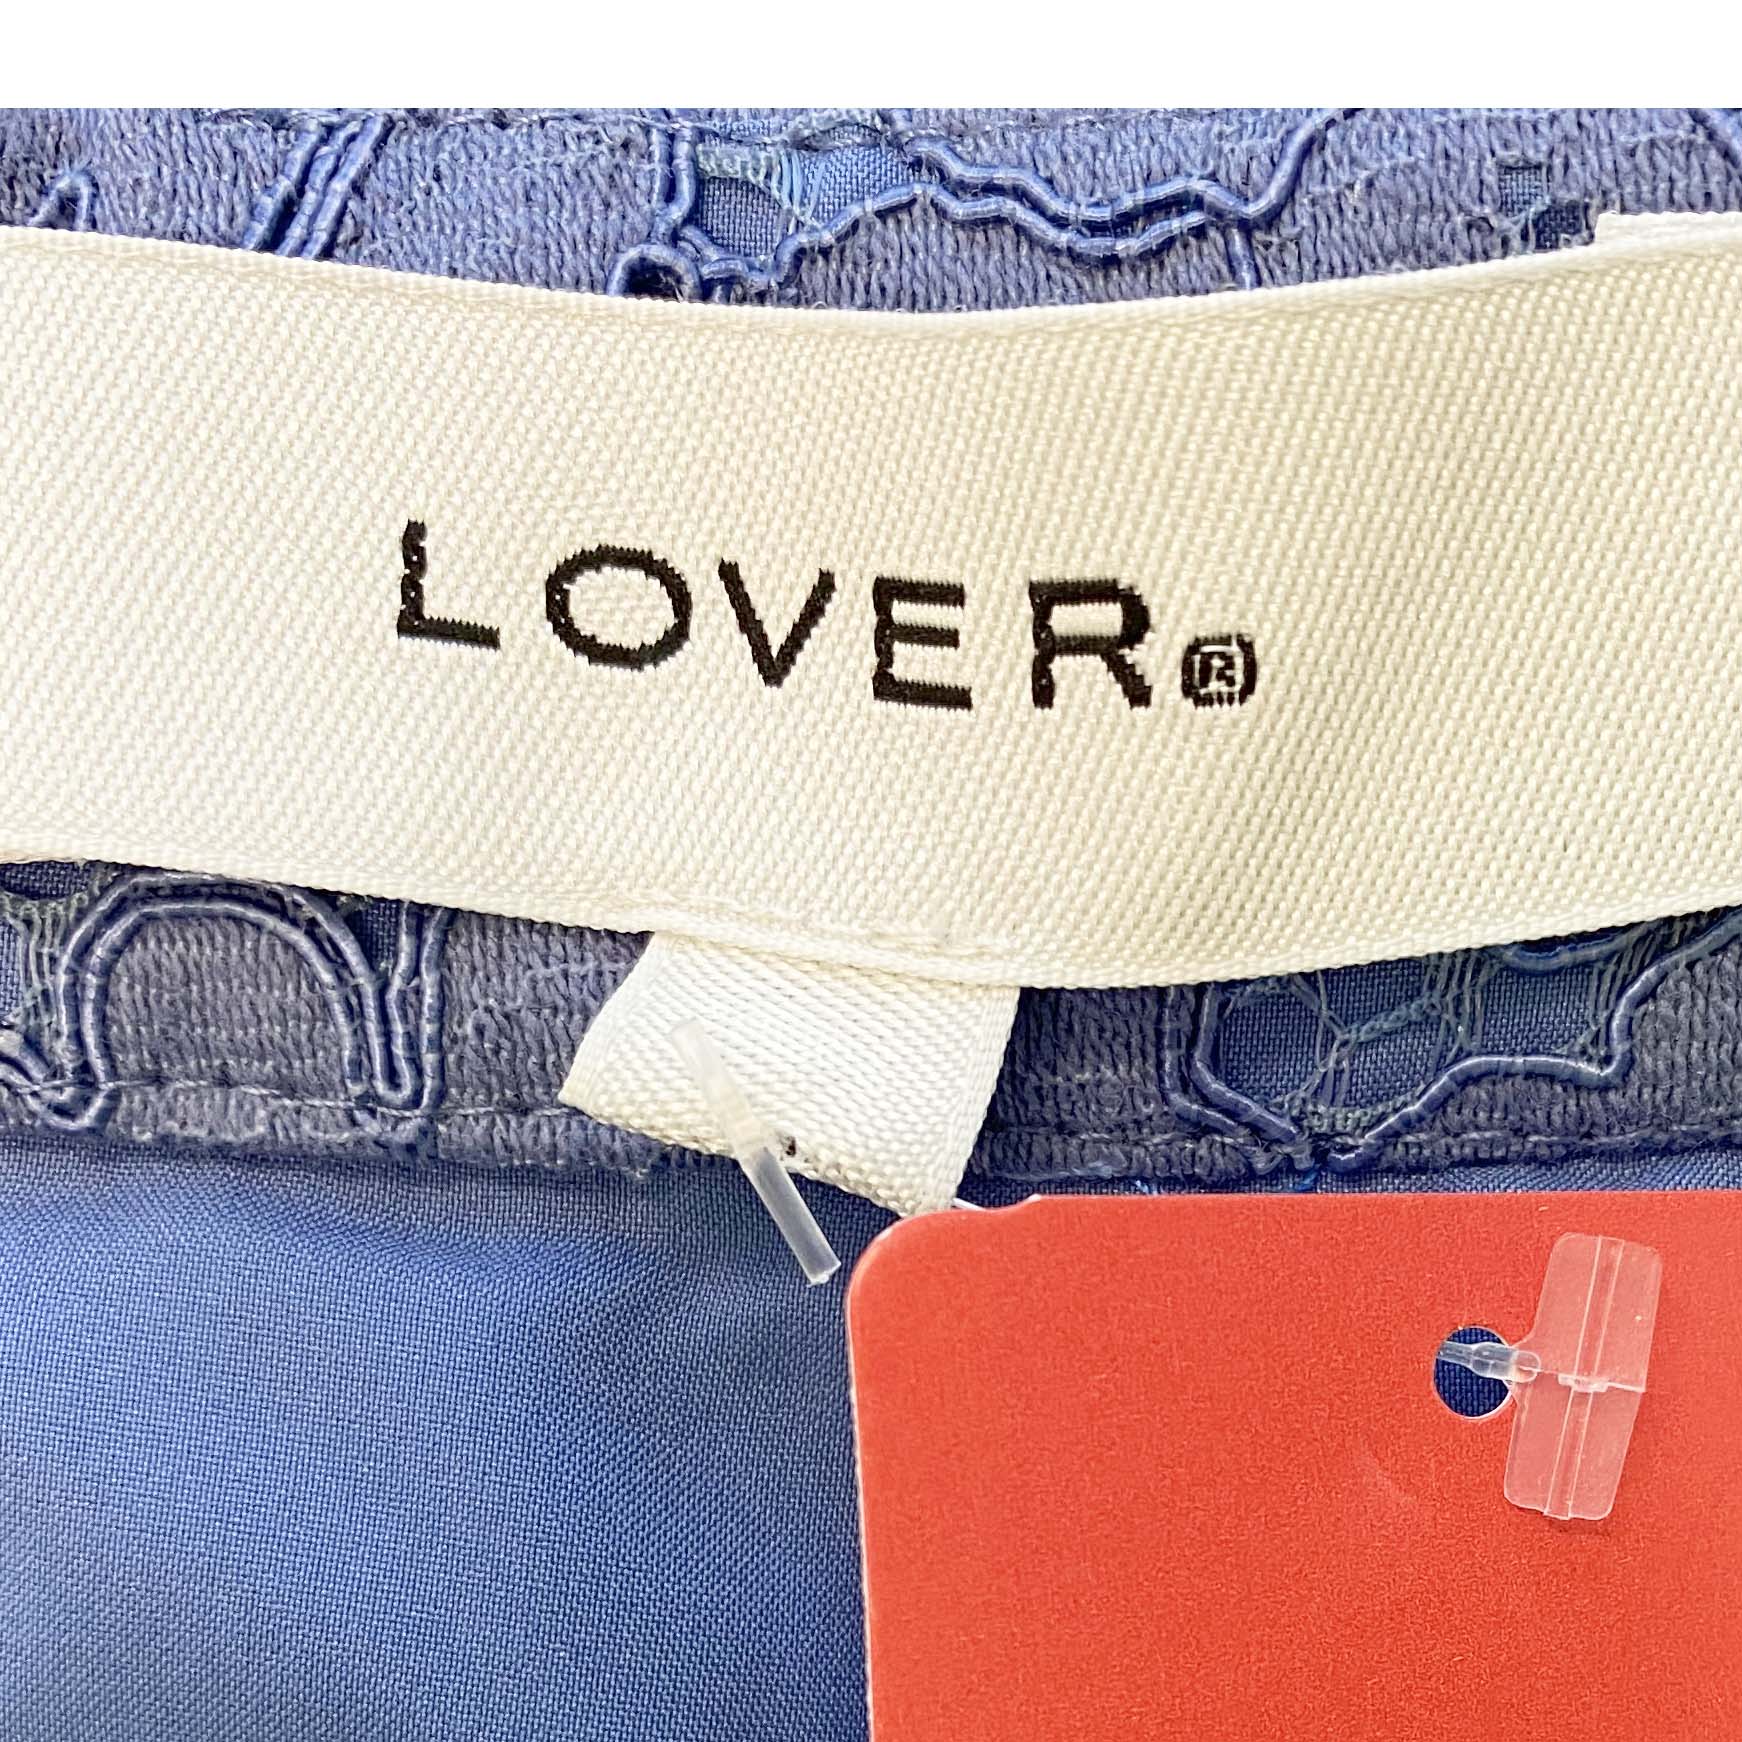 LOVER Blue Long Lace Pencil Skirt